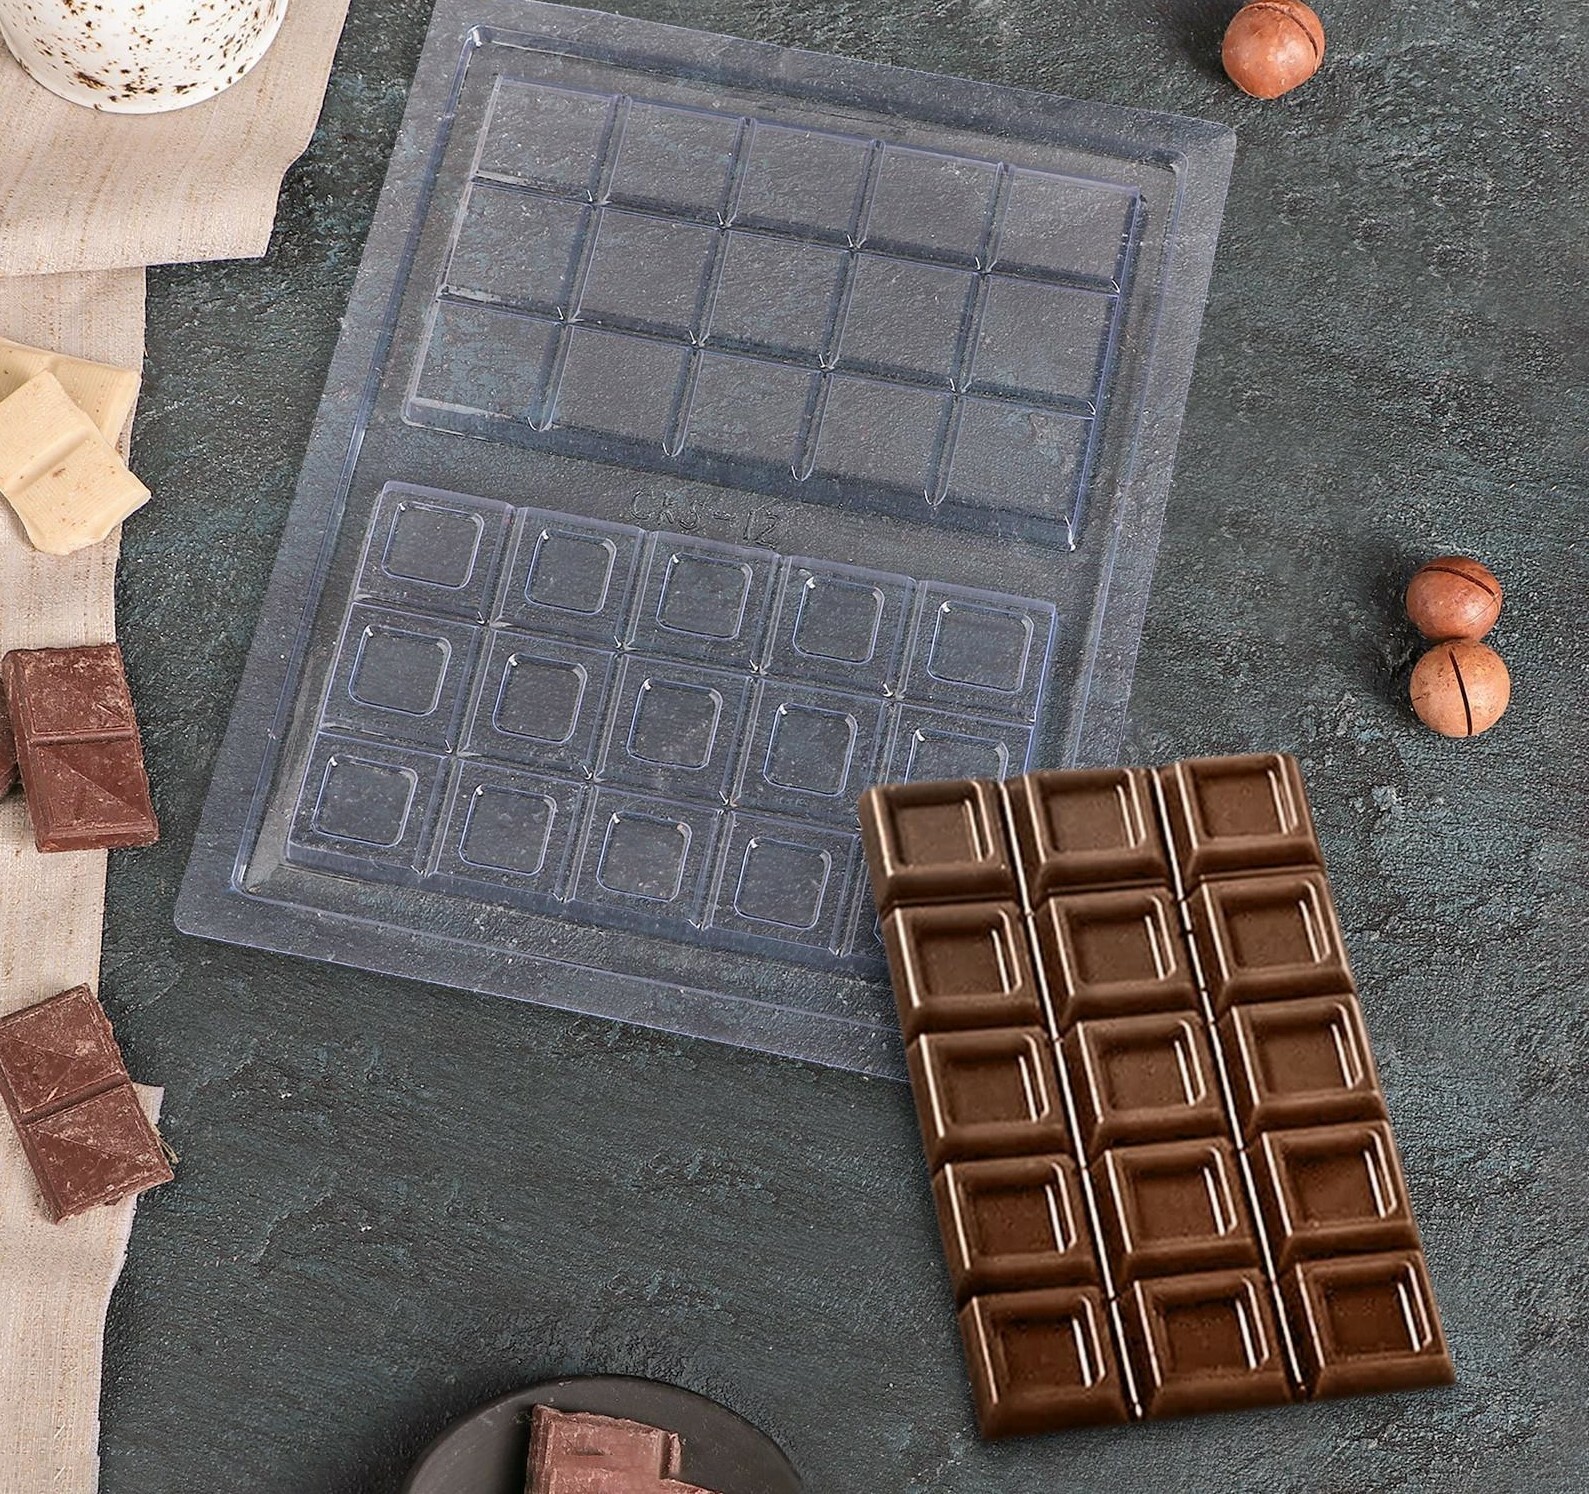 1 5 плитки шоколада. Форма для шоколада плитка. Плитка шоколада. Формы для шоколадных плиток. Пластиковые формы для шоколада.